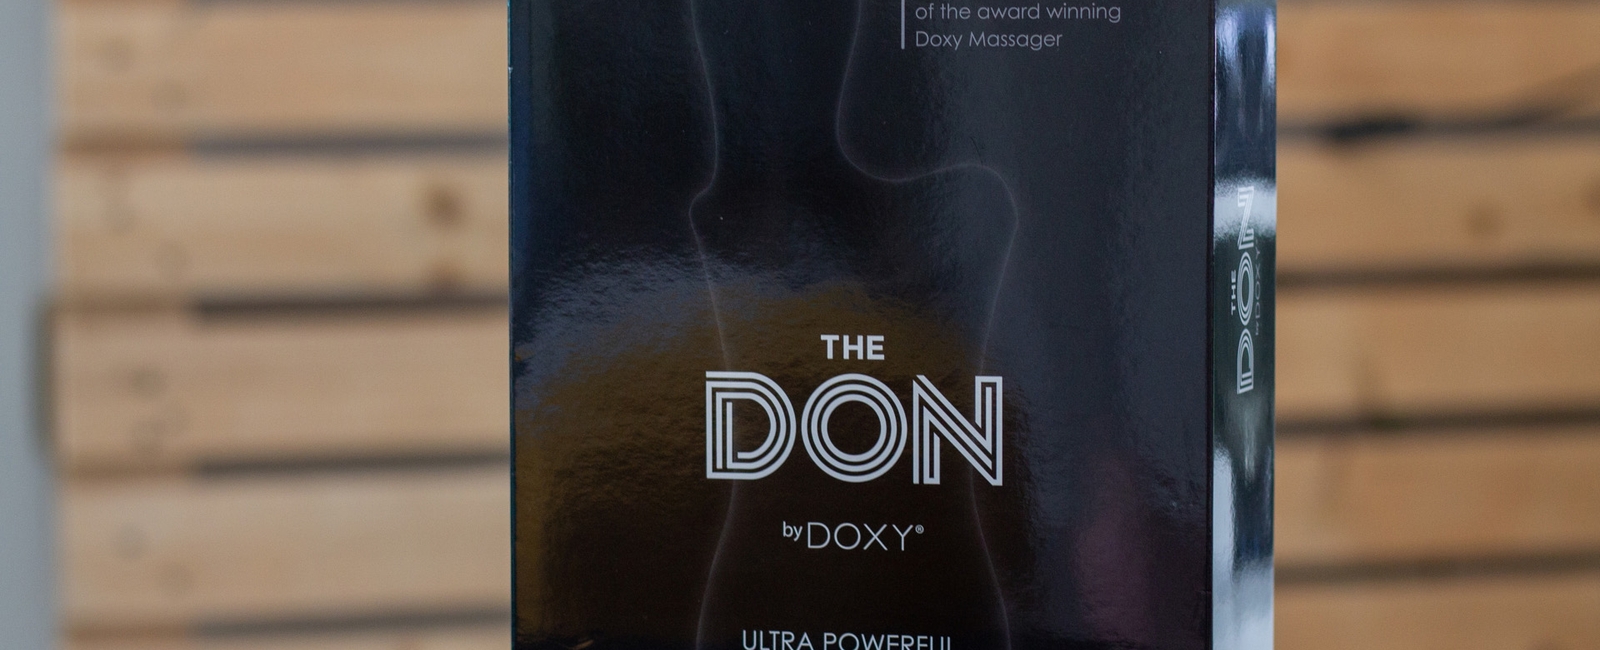 Test du stimulateur Skittle / The don - Doxy